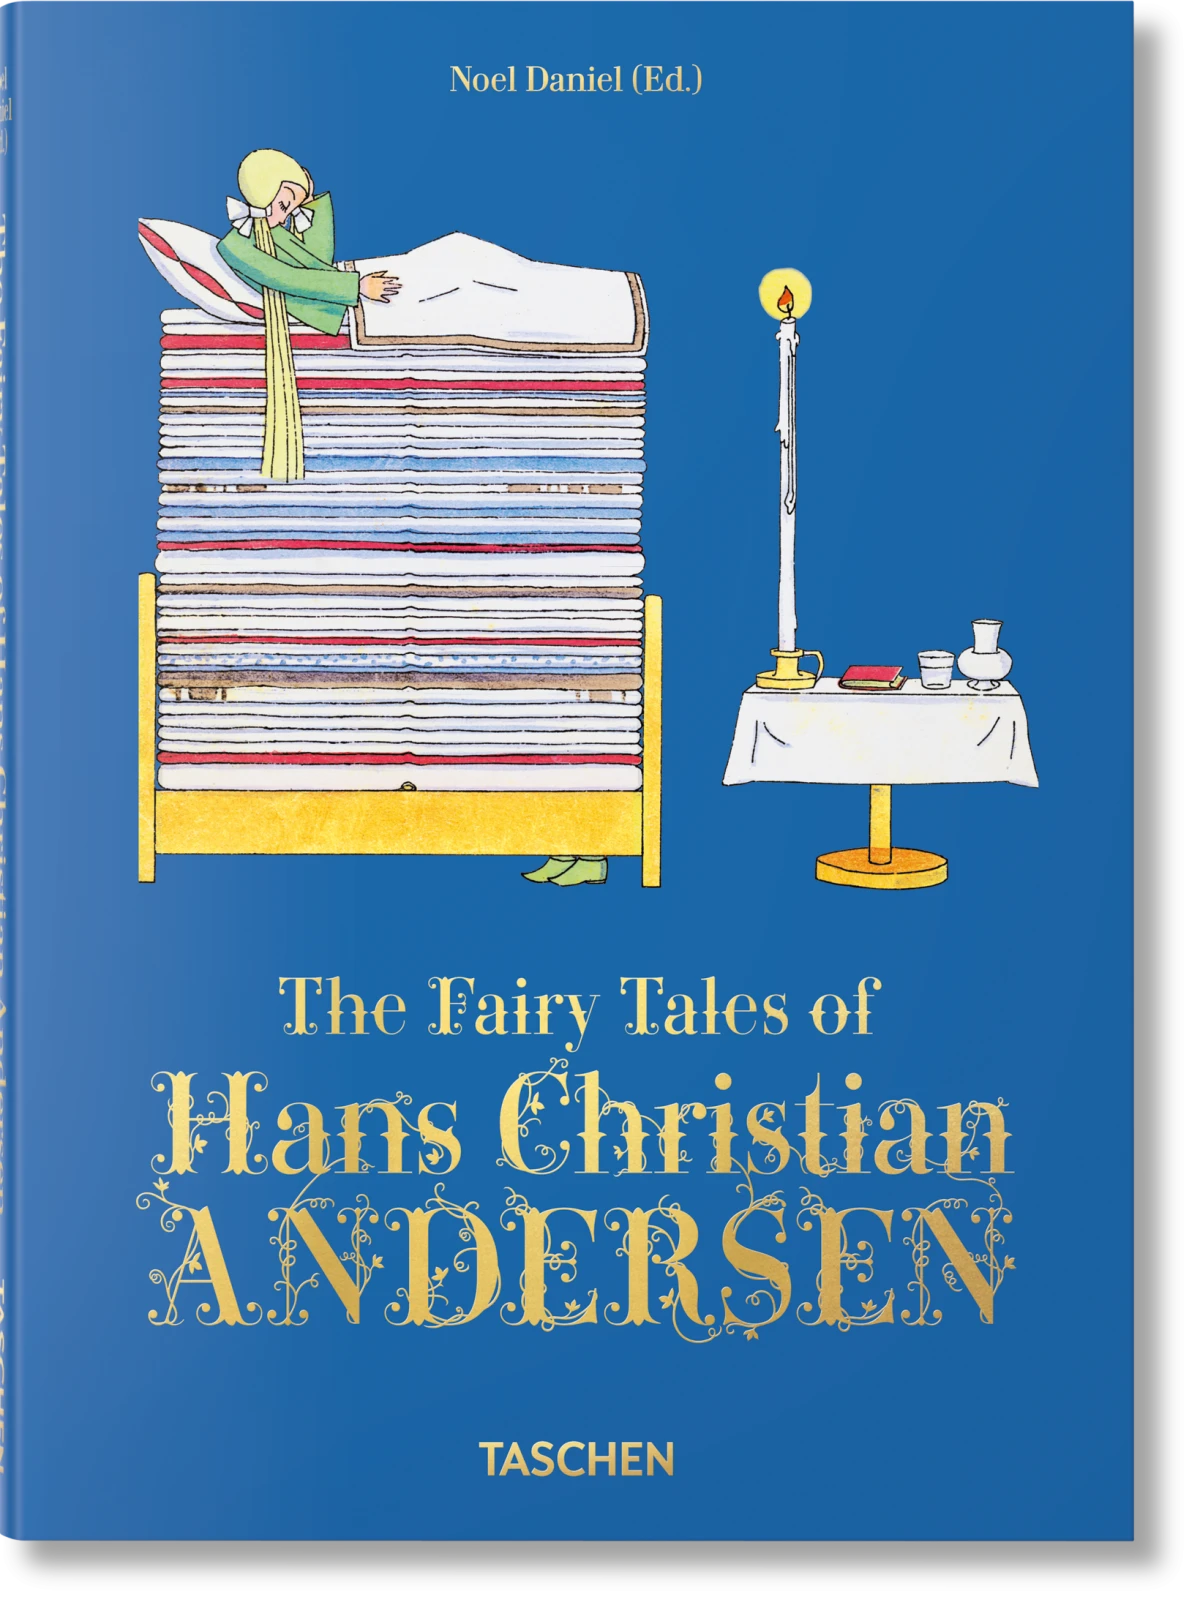 Le fiabe di Hans Christian Andersen